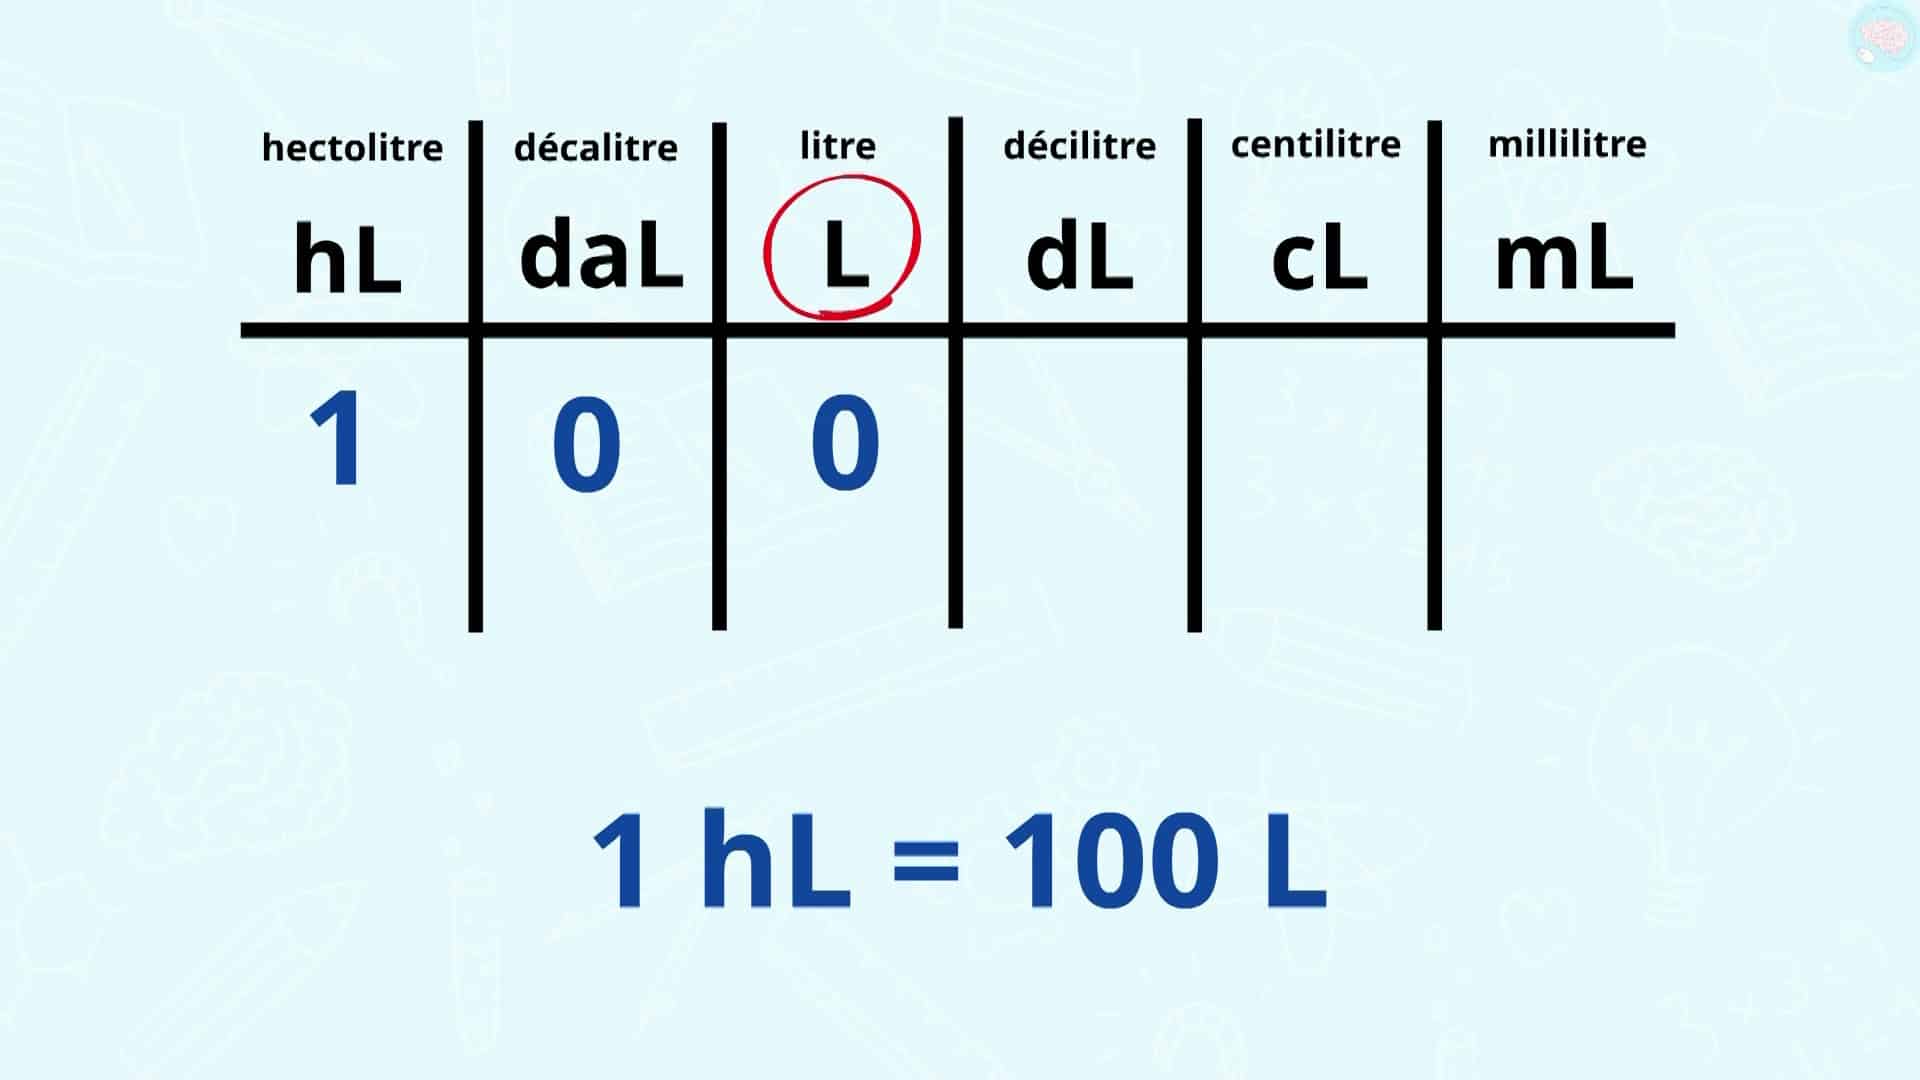 1 hectolitre = 100 litres